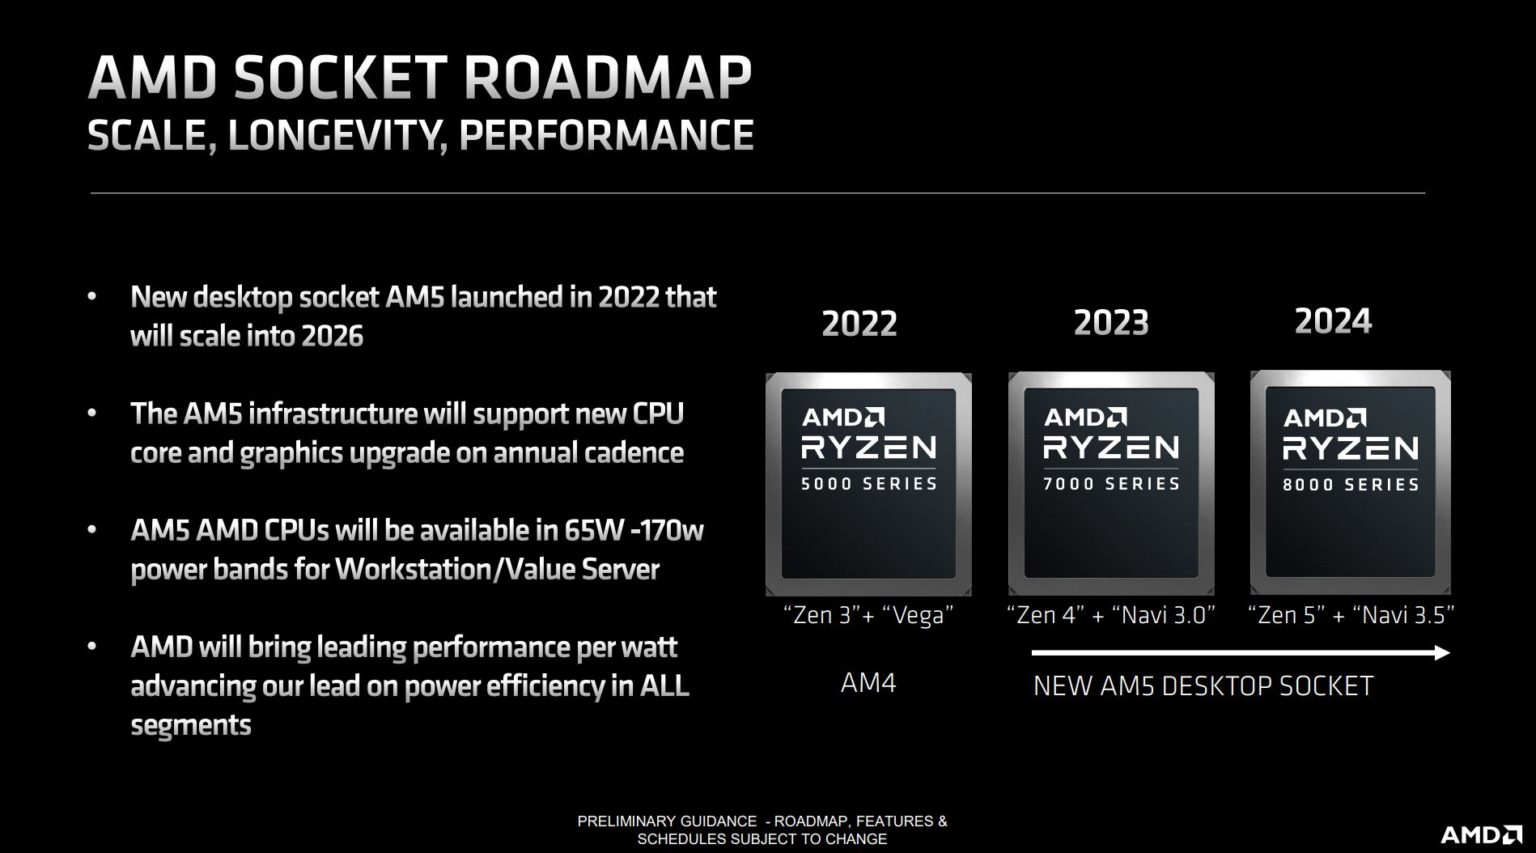 AMD Ryzen 8000 桌面版將採 Zen 5 加上 Navi 3.5 架構